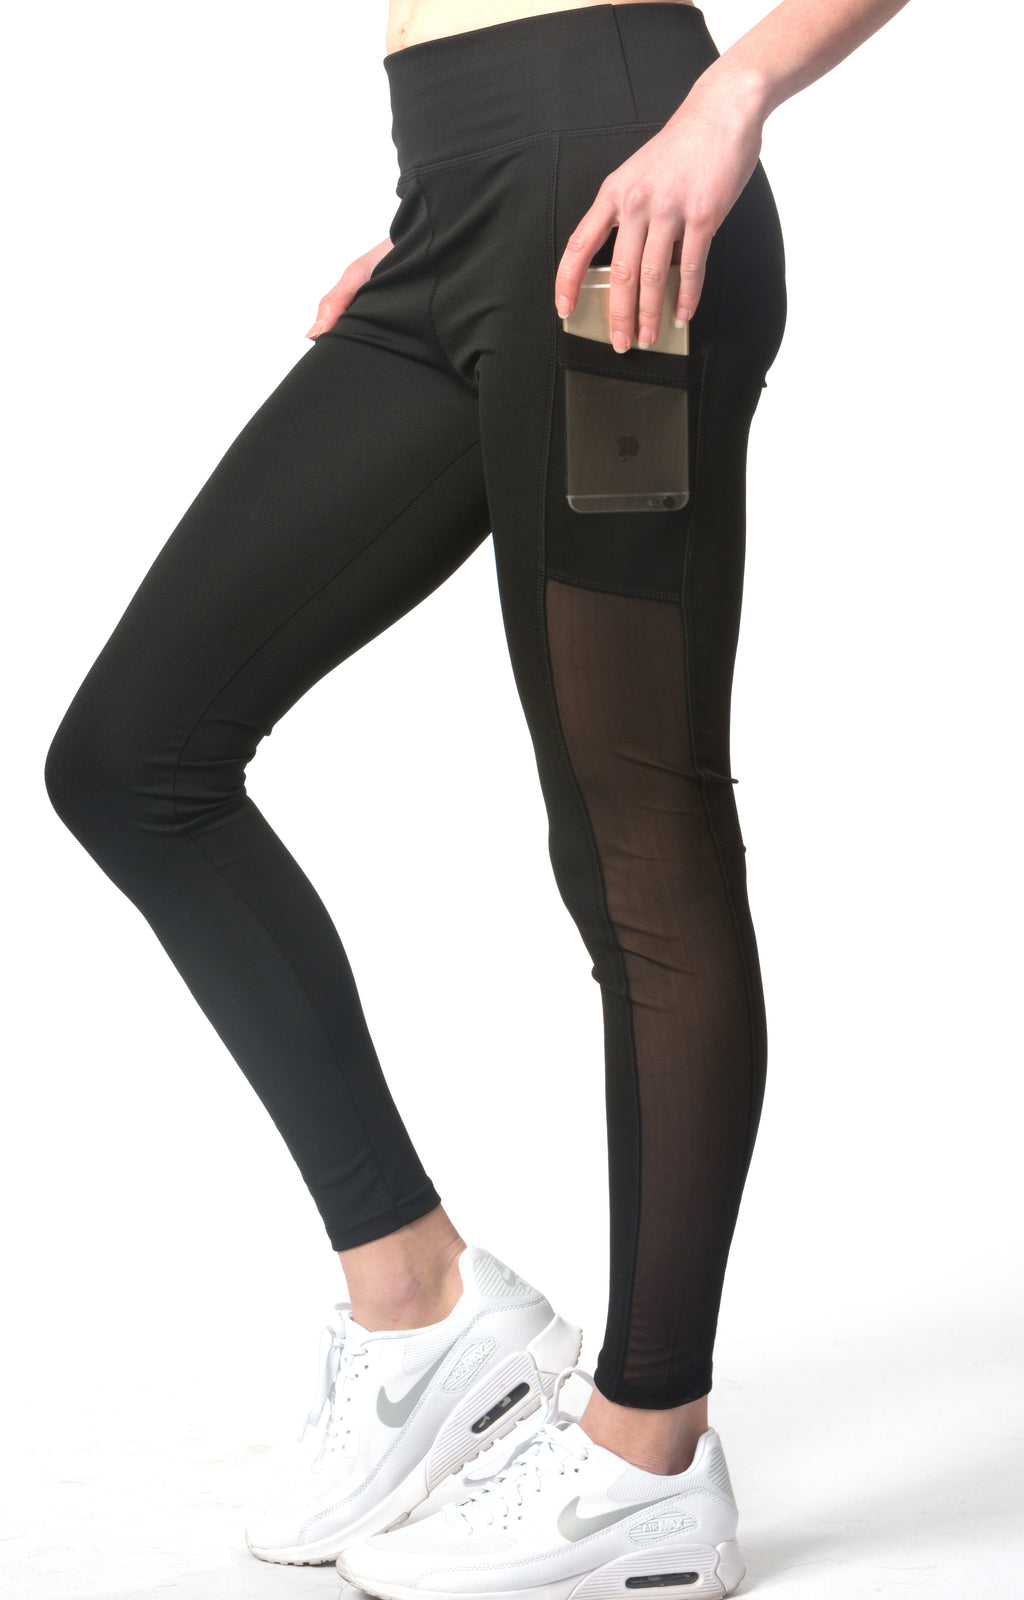 Women's Active Wear Black Mesh Slim Stretch Yoga Legging With Two Side Pockets ITEM NO: EM180018